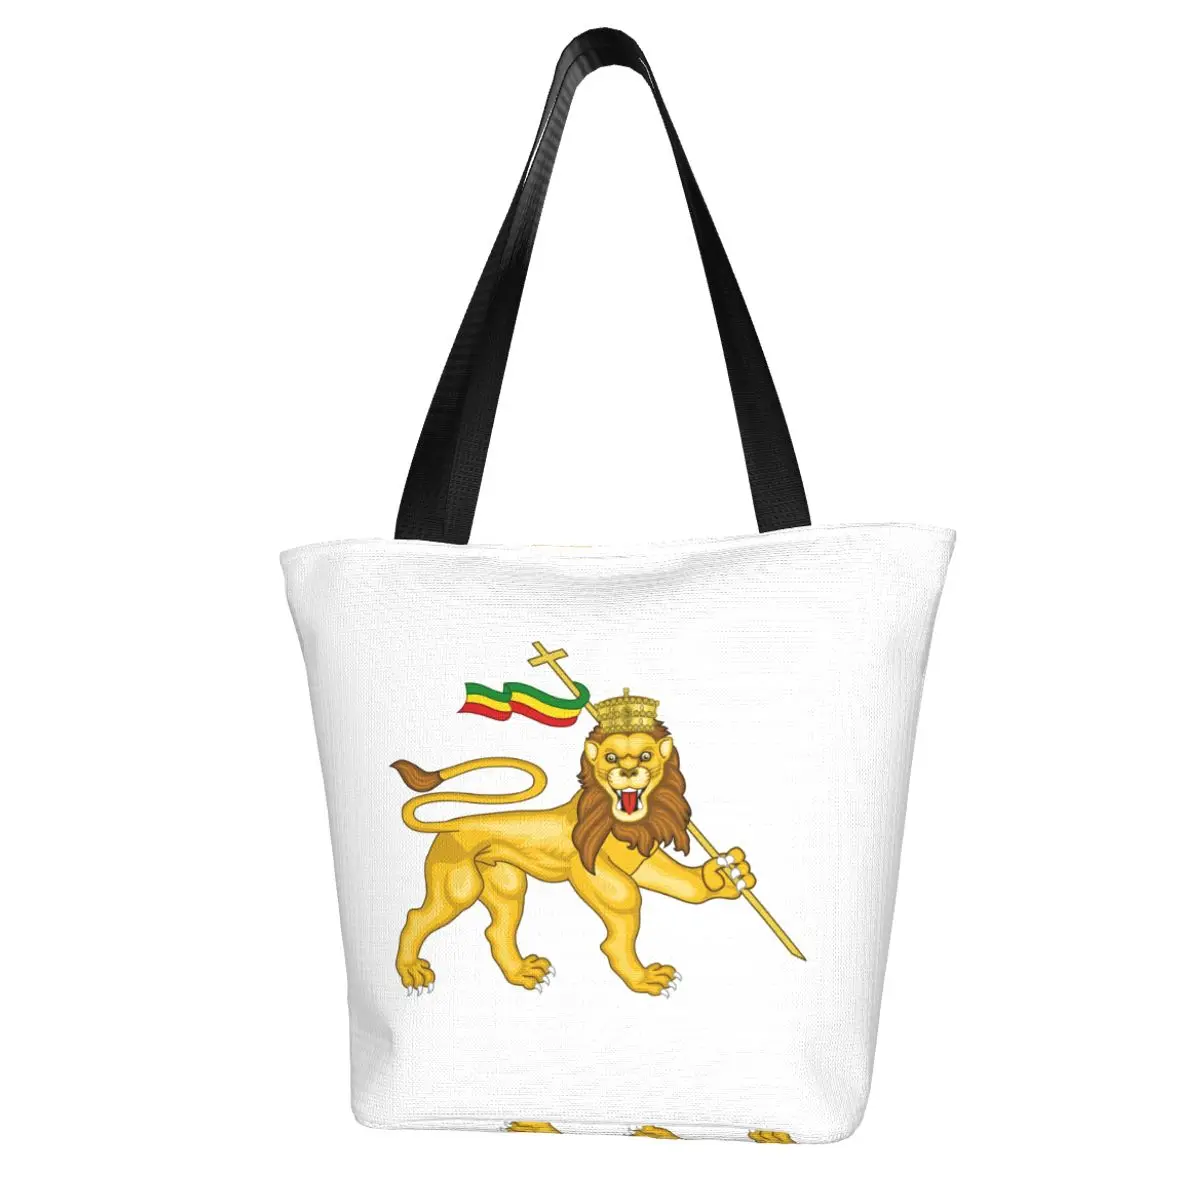 Ethiopian Empire Kingdom Of Judah Transitional Gov Lion Shopping Bag Aesthetic Cloth Outdoor Handbag Female Fashion Bags